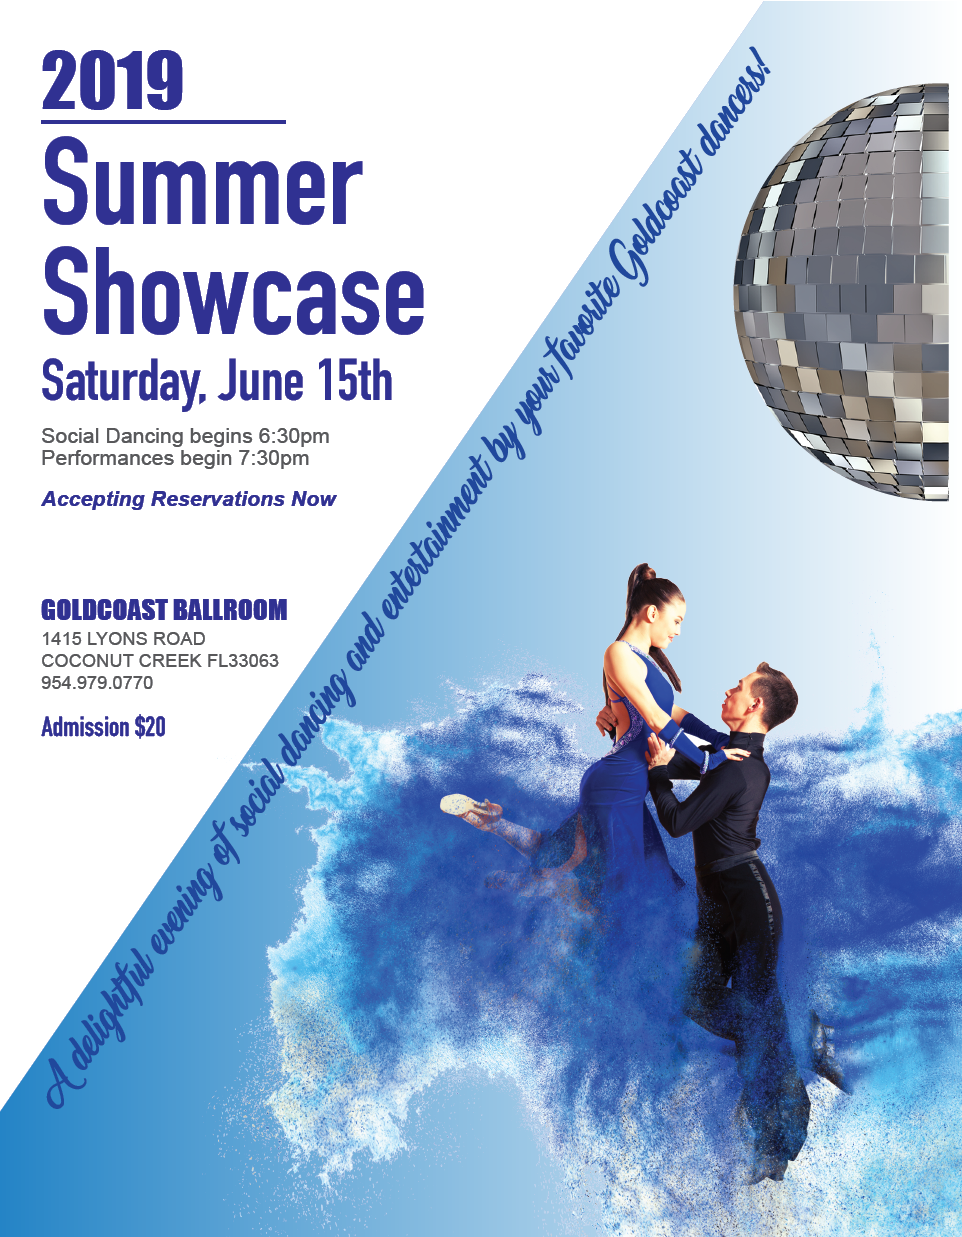 Goldcoast Ballroom - 2019 Summer Showcase - June 15, 2019!